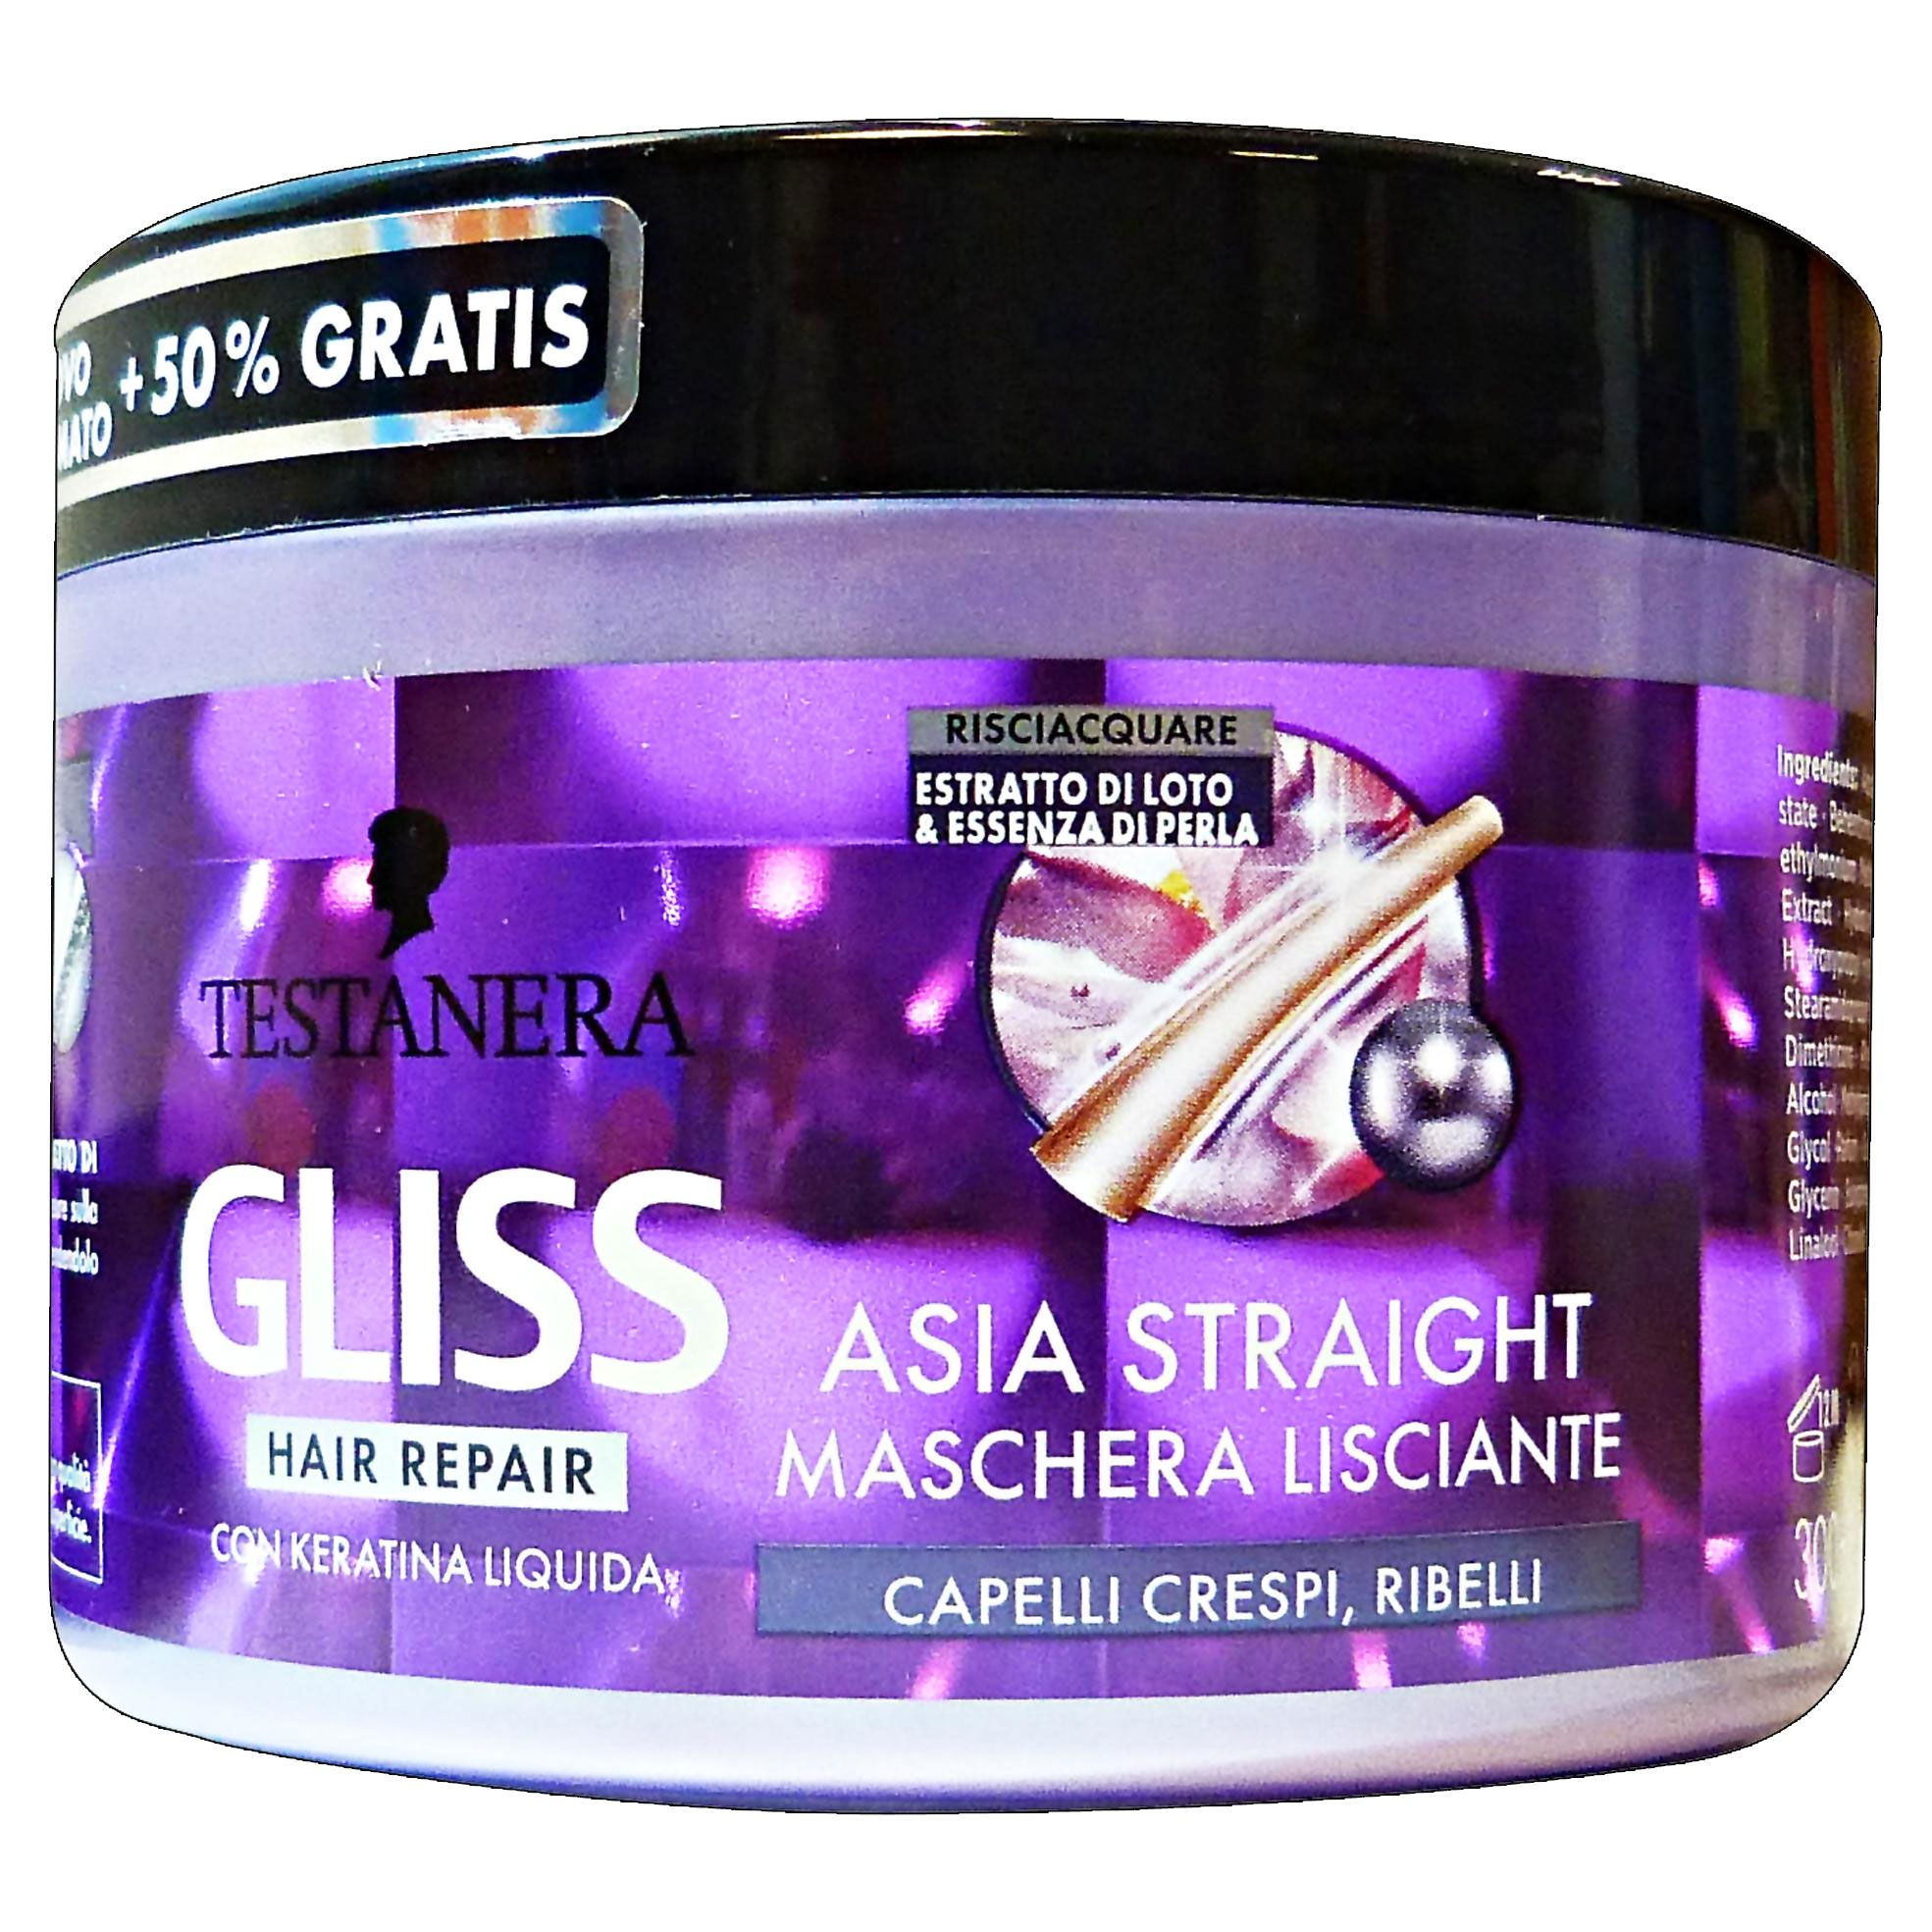 ماسک مو گلیس مدل Asia Straight Maschera حجم 200 میلی لیتر